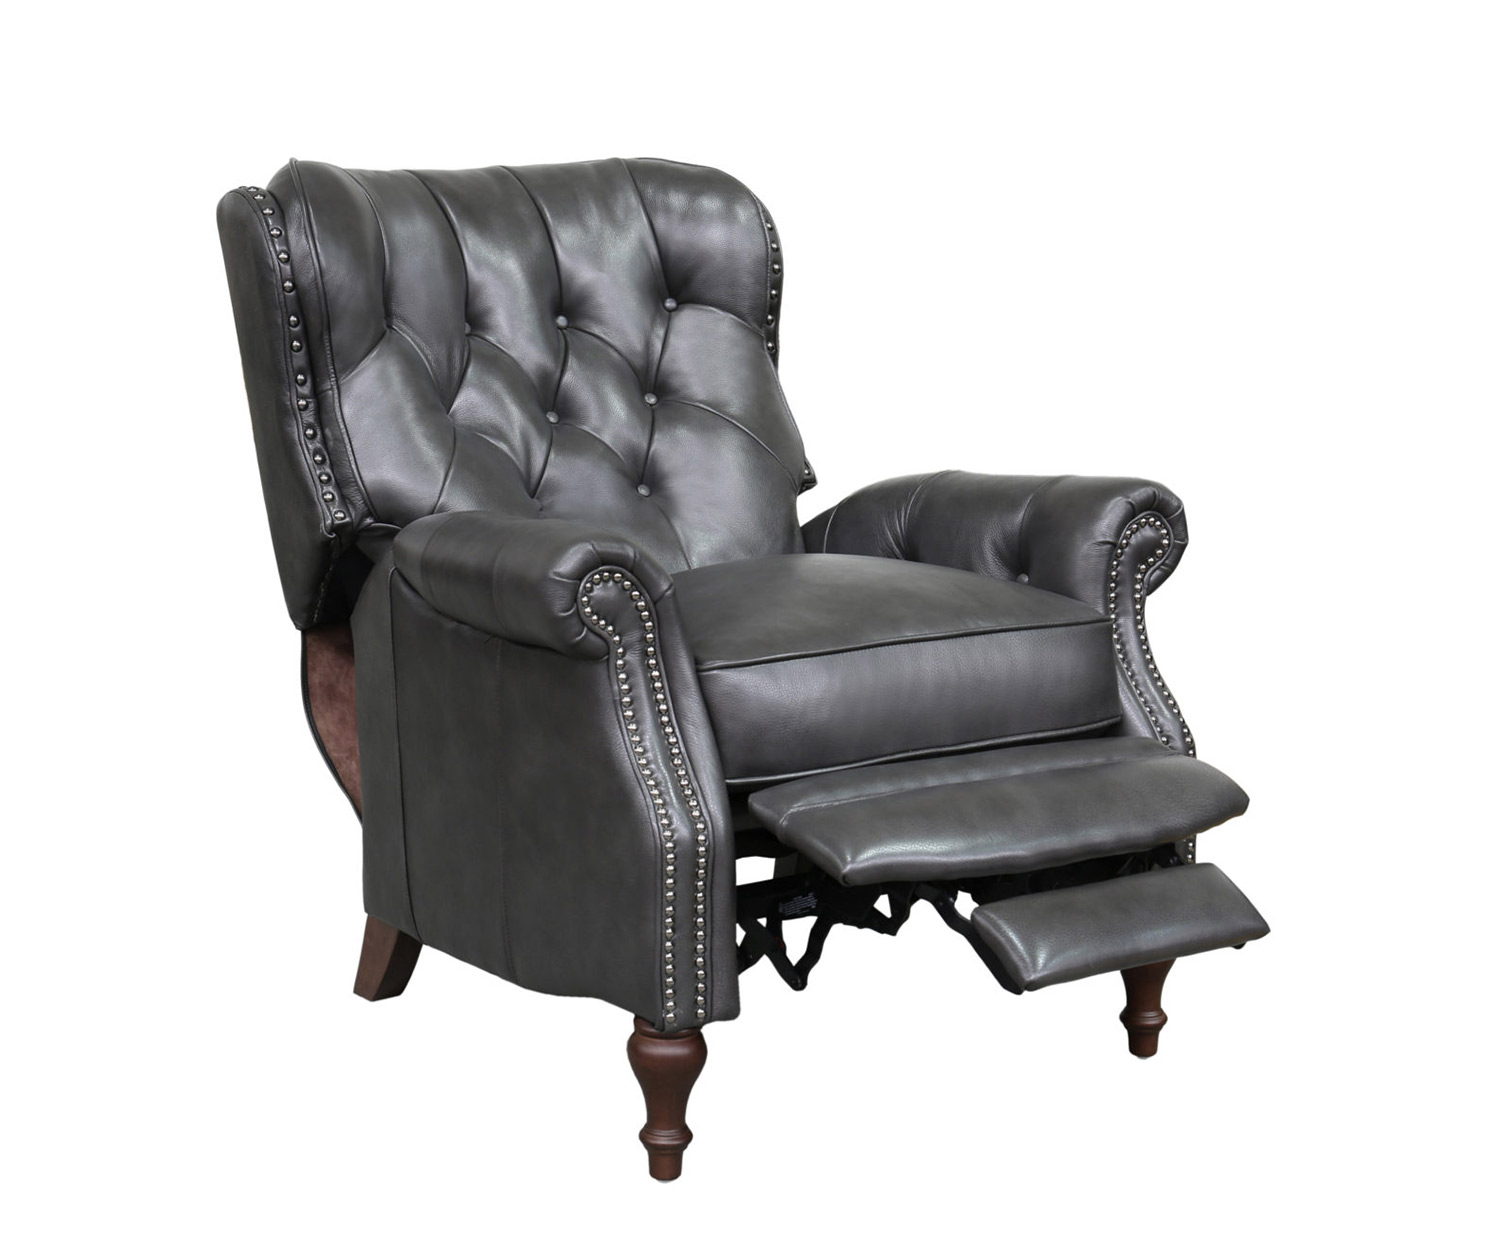 Barcalounger Kendall Recliner Chair - Wrenn Gray/all leather